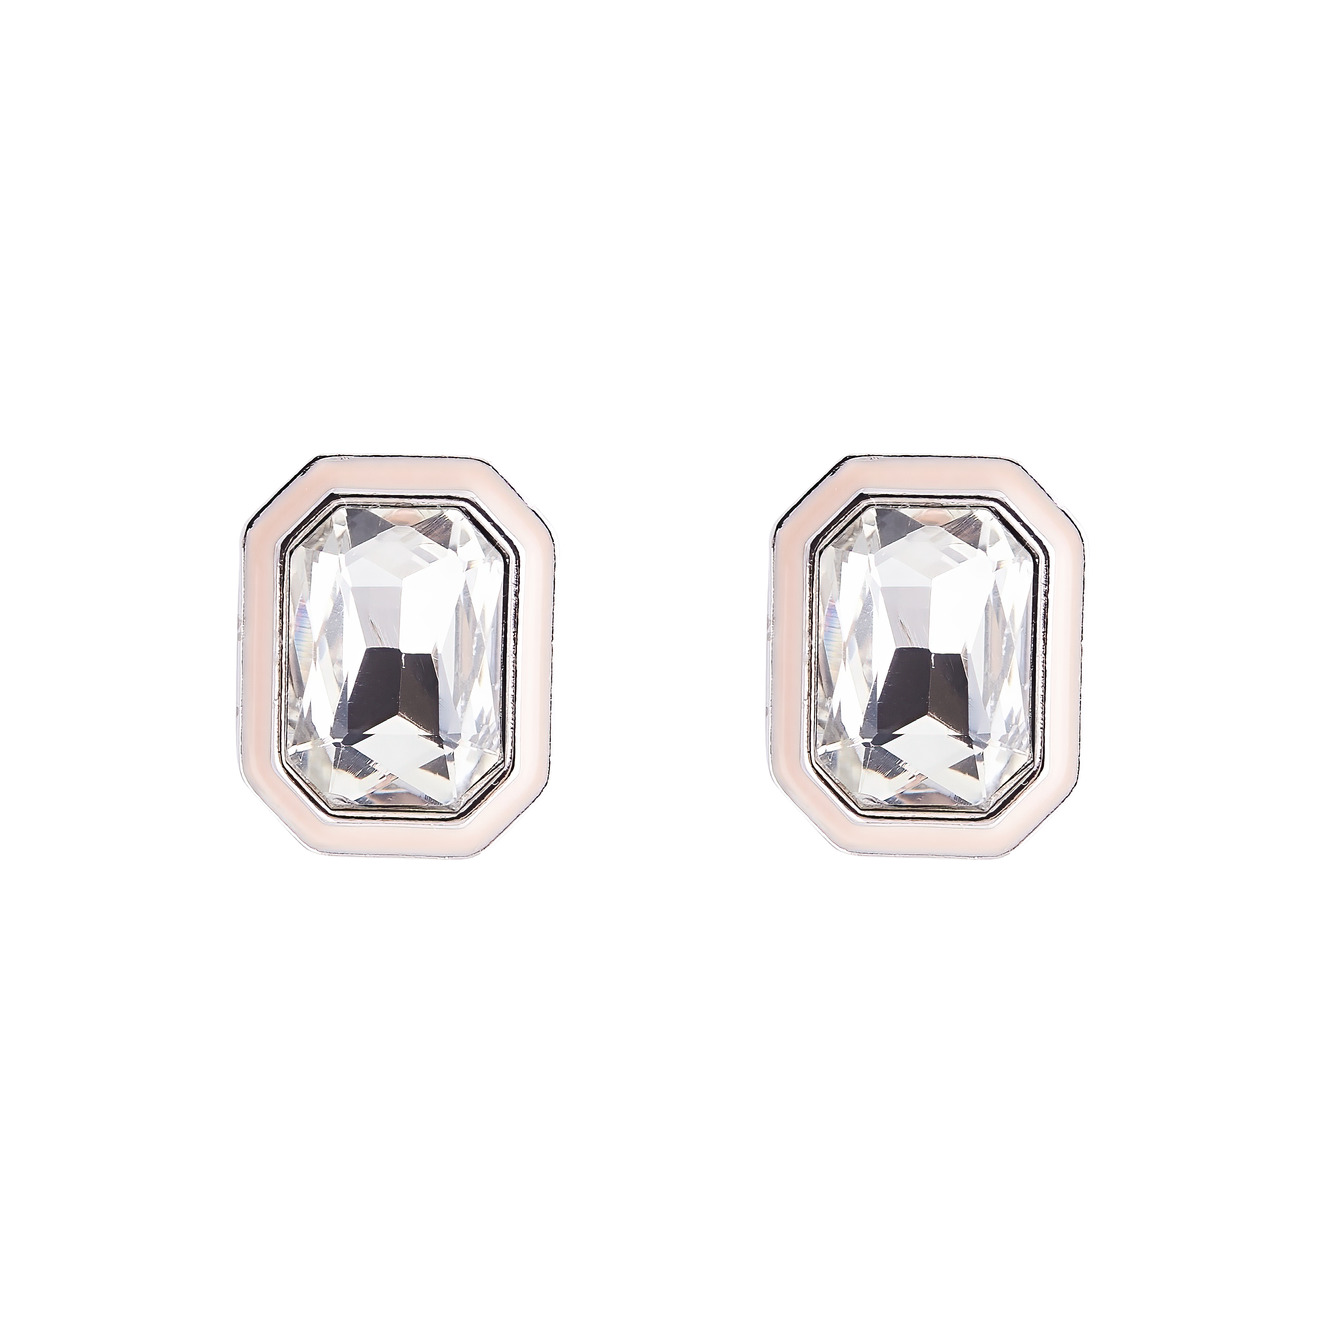 Herald Percy Серебристые серьги с белыми кристаллами и розовой эмалью herald percy серебристые серьги круги с эмалью и кристаллами